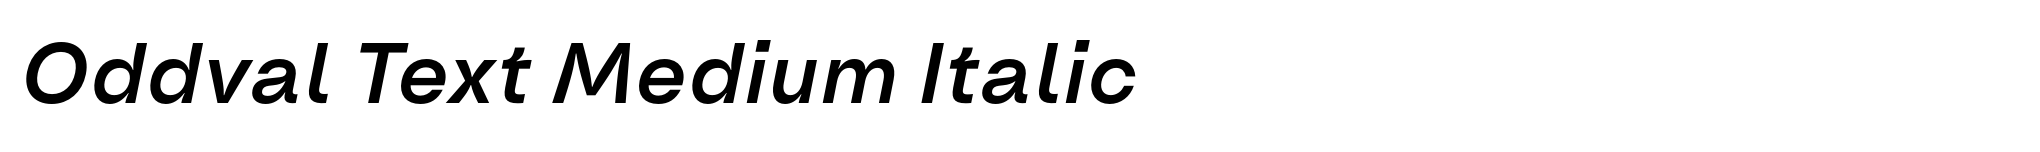 Oddval Text Medium Italic image